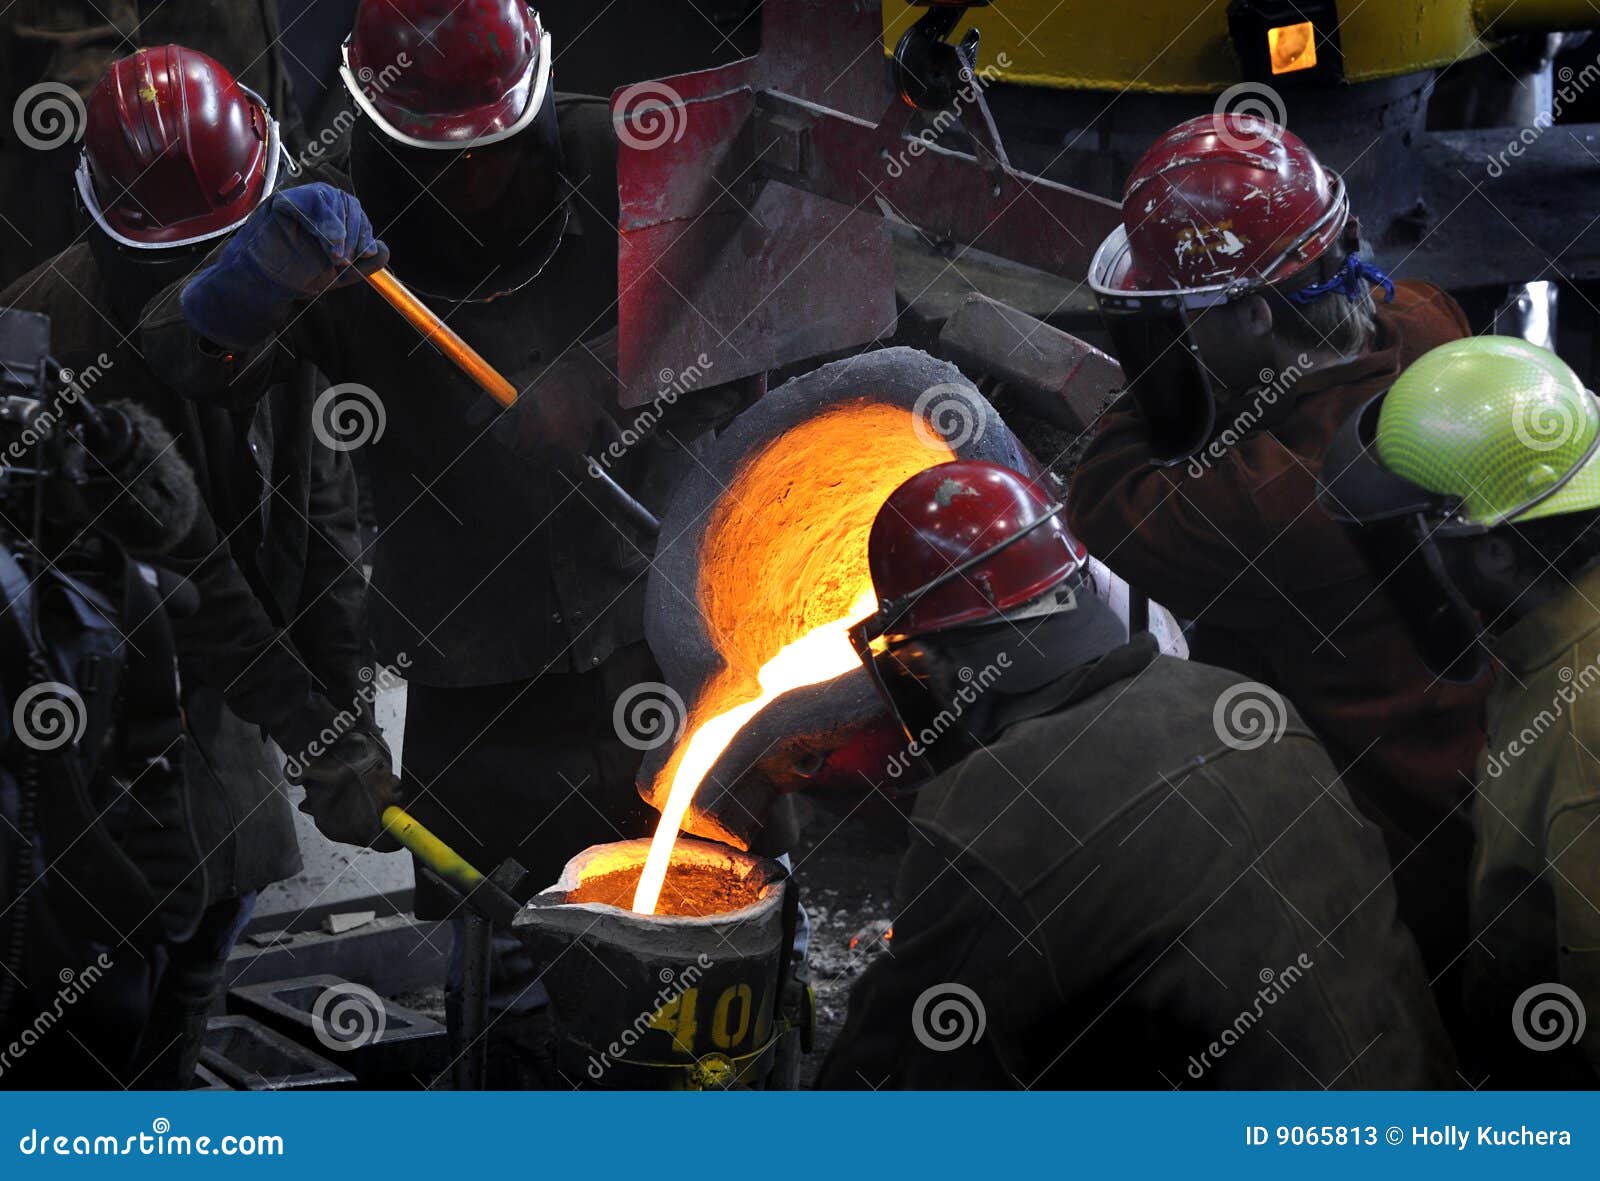 iron pour - workers gather around